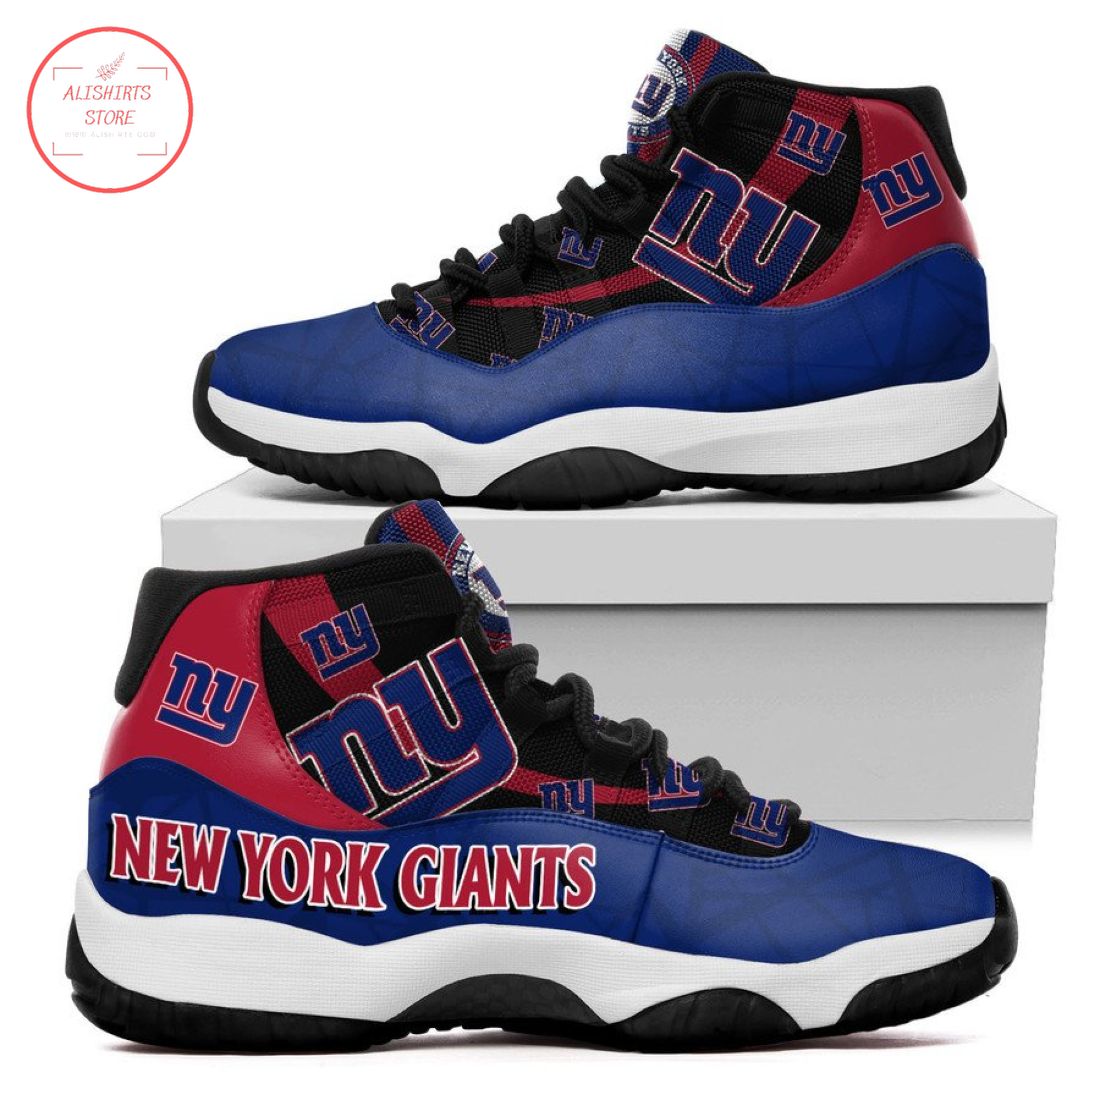 NFL New York Giants New Air Jordan 11 Sneakers Shoes